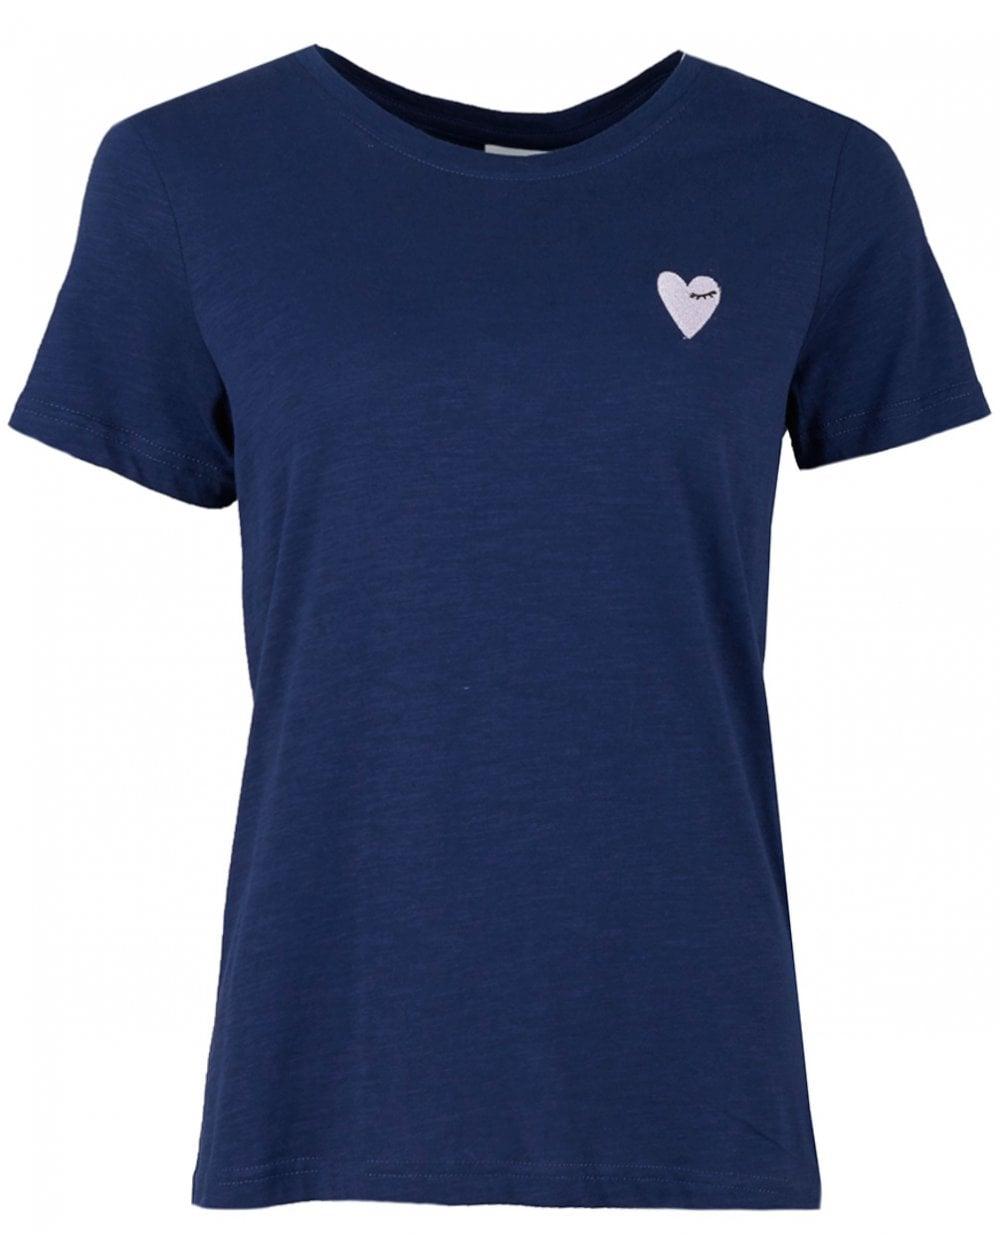 T and Heart Logo - Saint Tropez Heart Logo T Shirt Shirts From Psyche UK